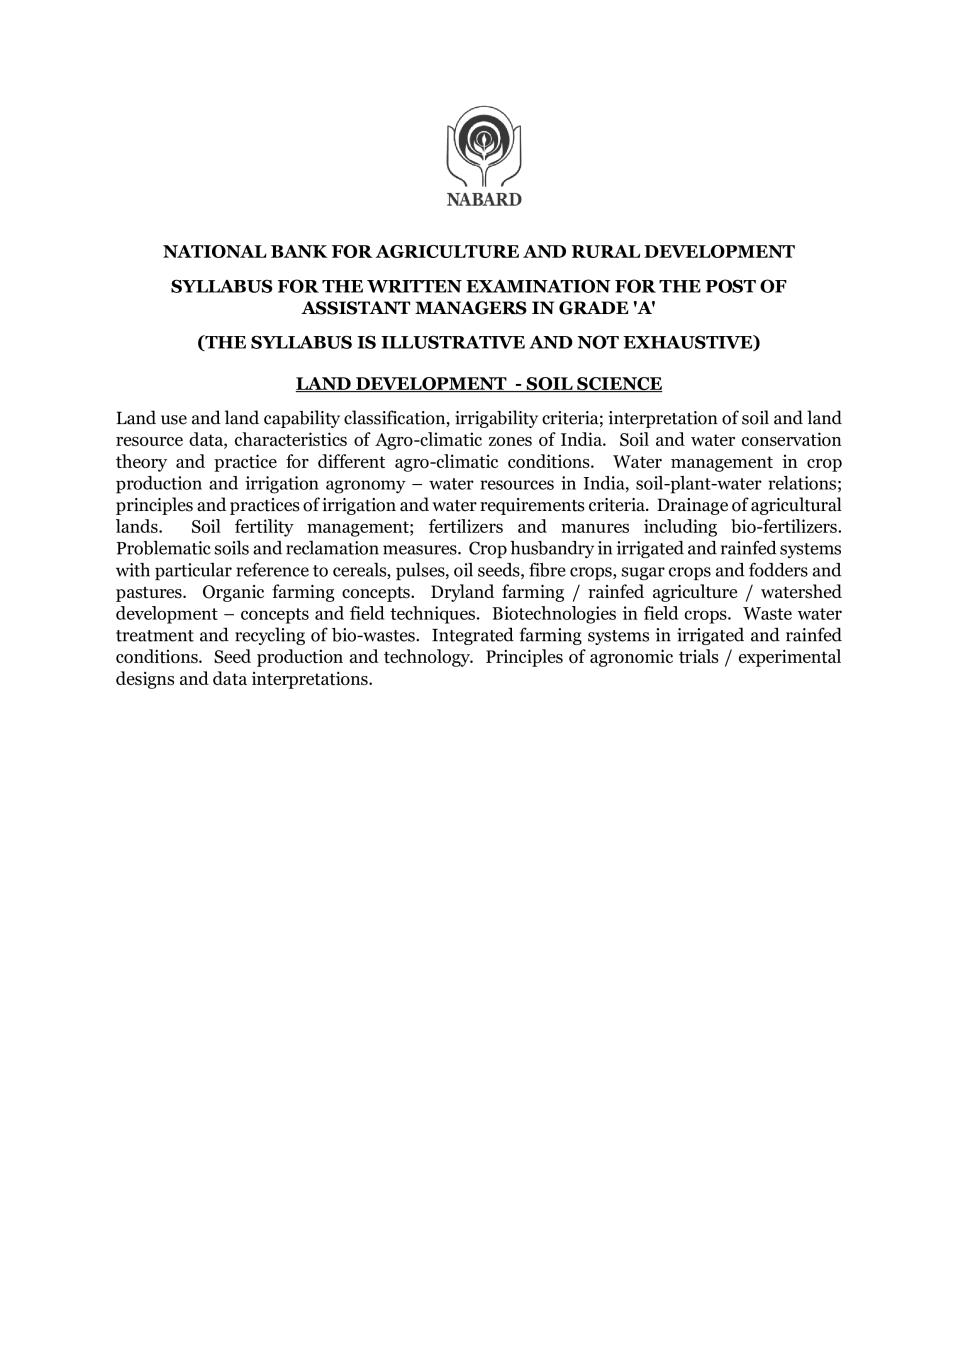 NABARD Grade A Syllabus 2020 Land Development - Soil Science - Page 1